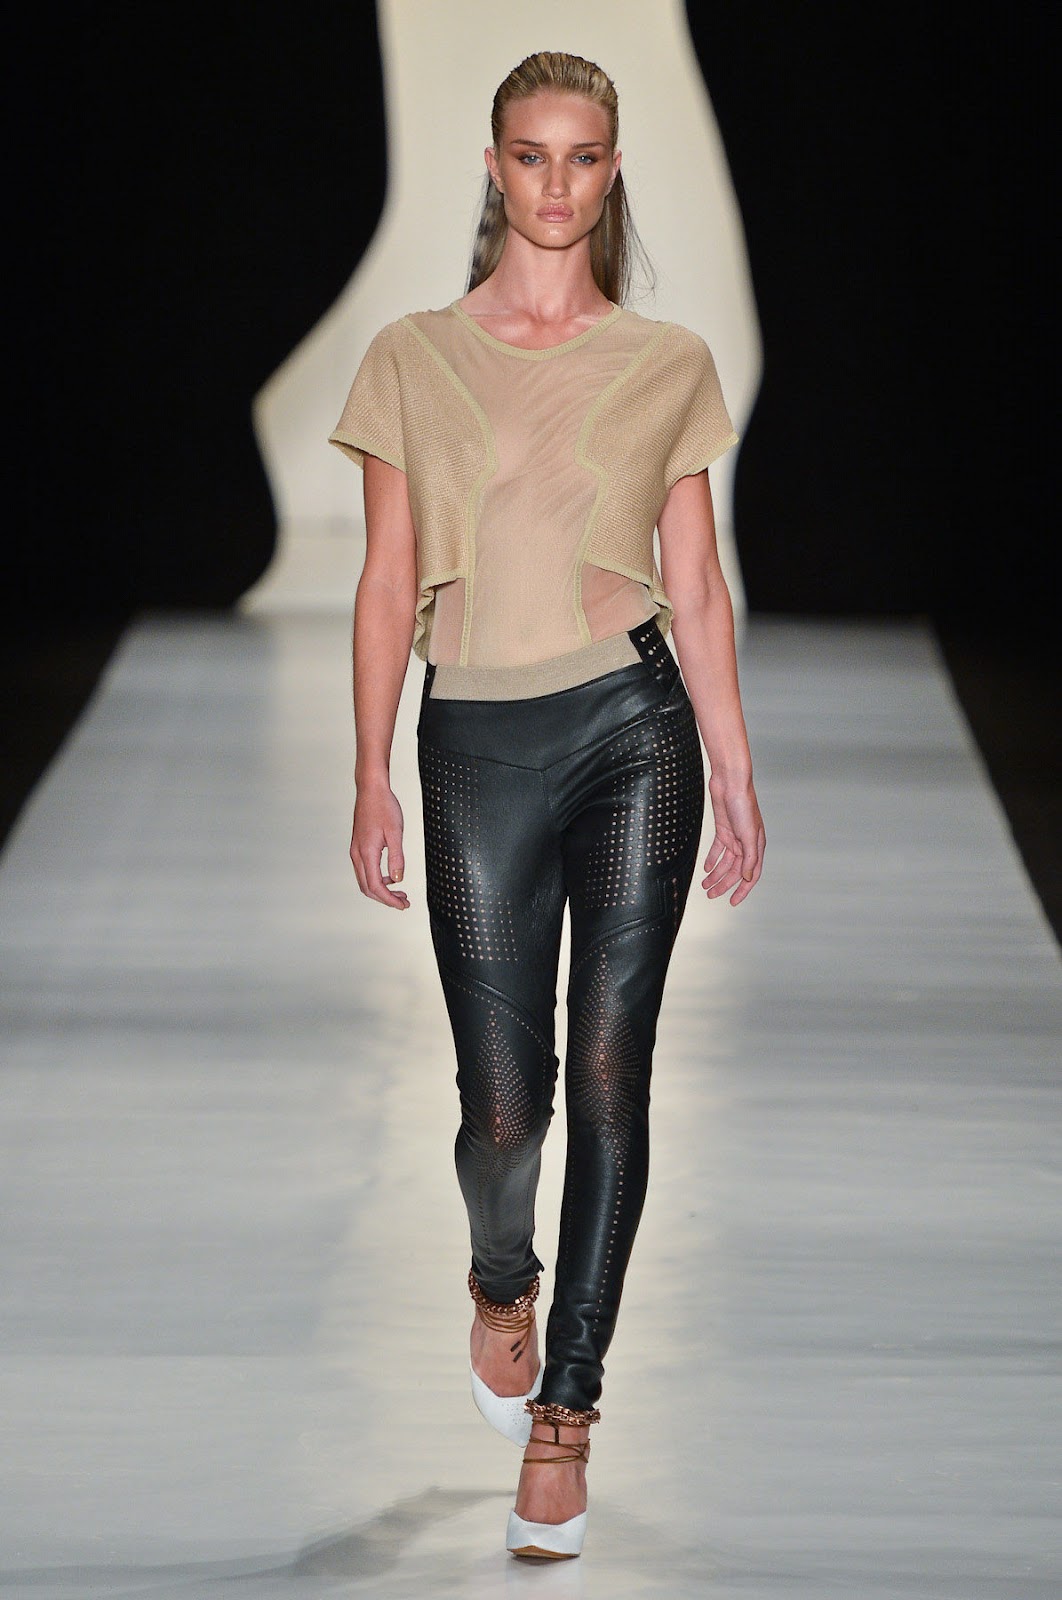 Rosie Huntington Animale S/S 2013 - Models Inspiration